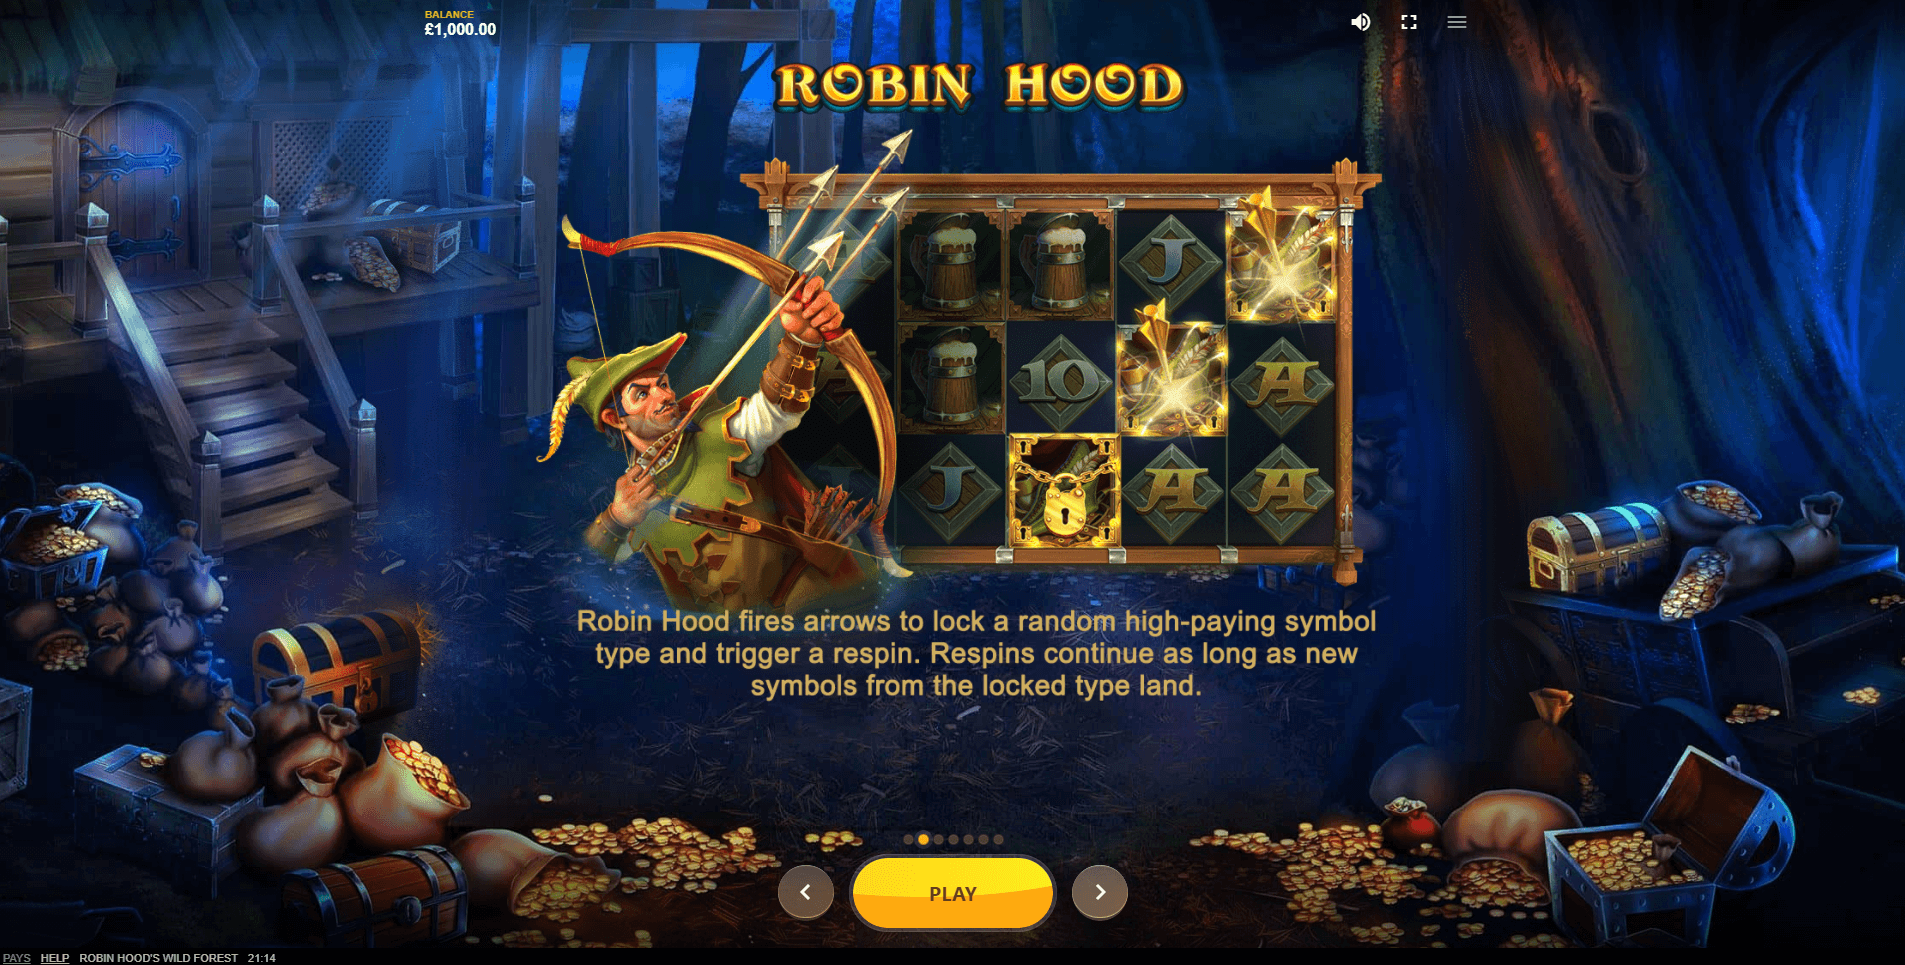 robin hoods wild forest slot machine detail image 0